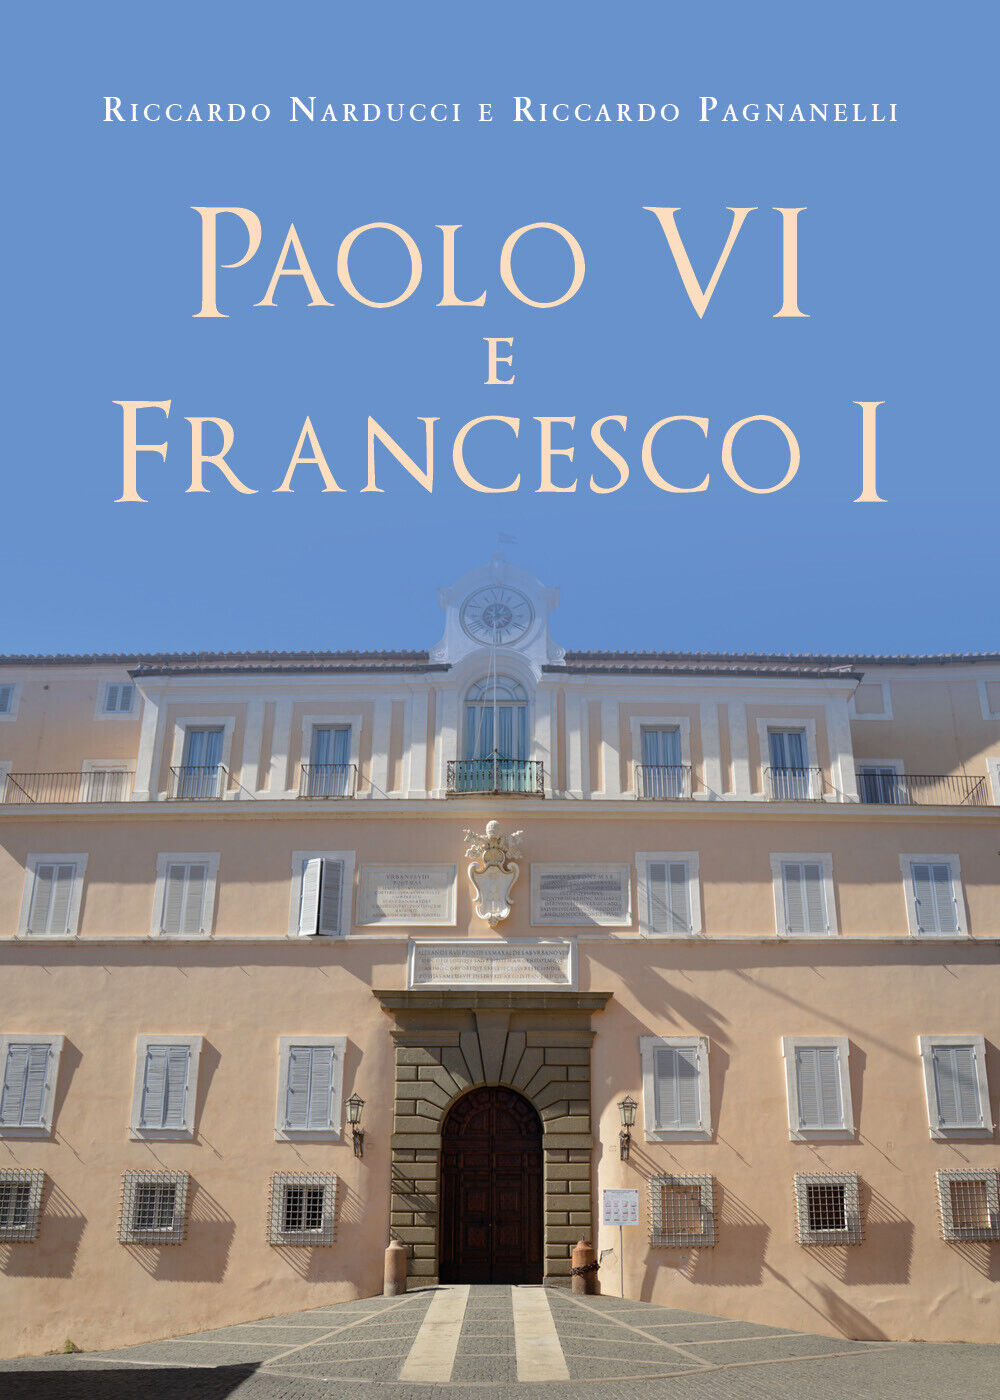 Paolo VI e Francesco I  di Riccardo Narducci,  2019,  Youcanprint